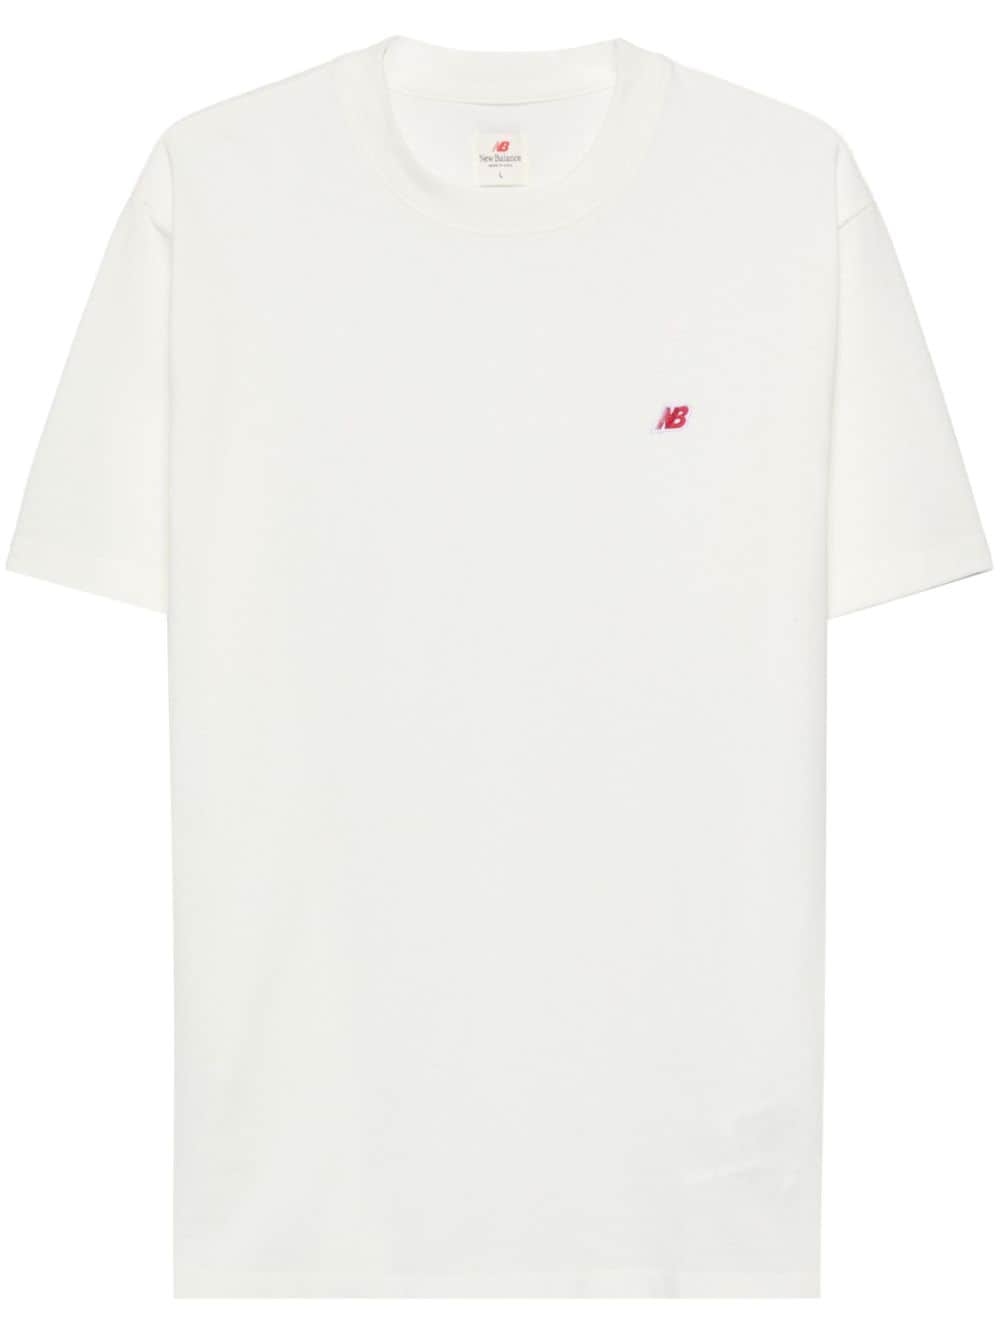 New Balance Made in USA Core T-Shirt - White von New Balance